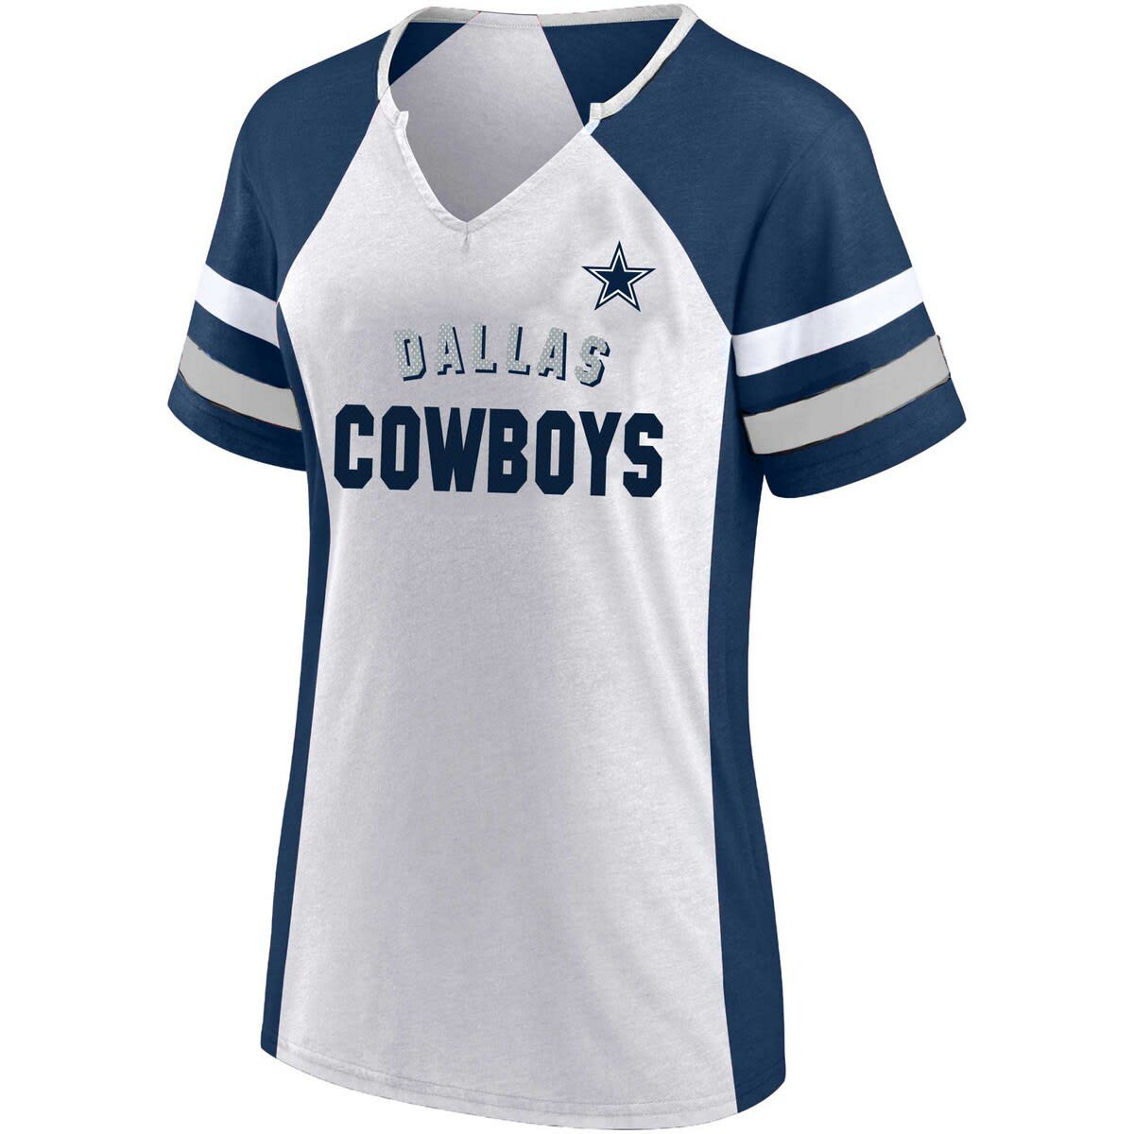 Fanatics Women's Fanatics White/Navy Dallas Cowboys Plus Size Color Block T-Shirt - Image 2 of 2